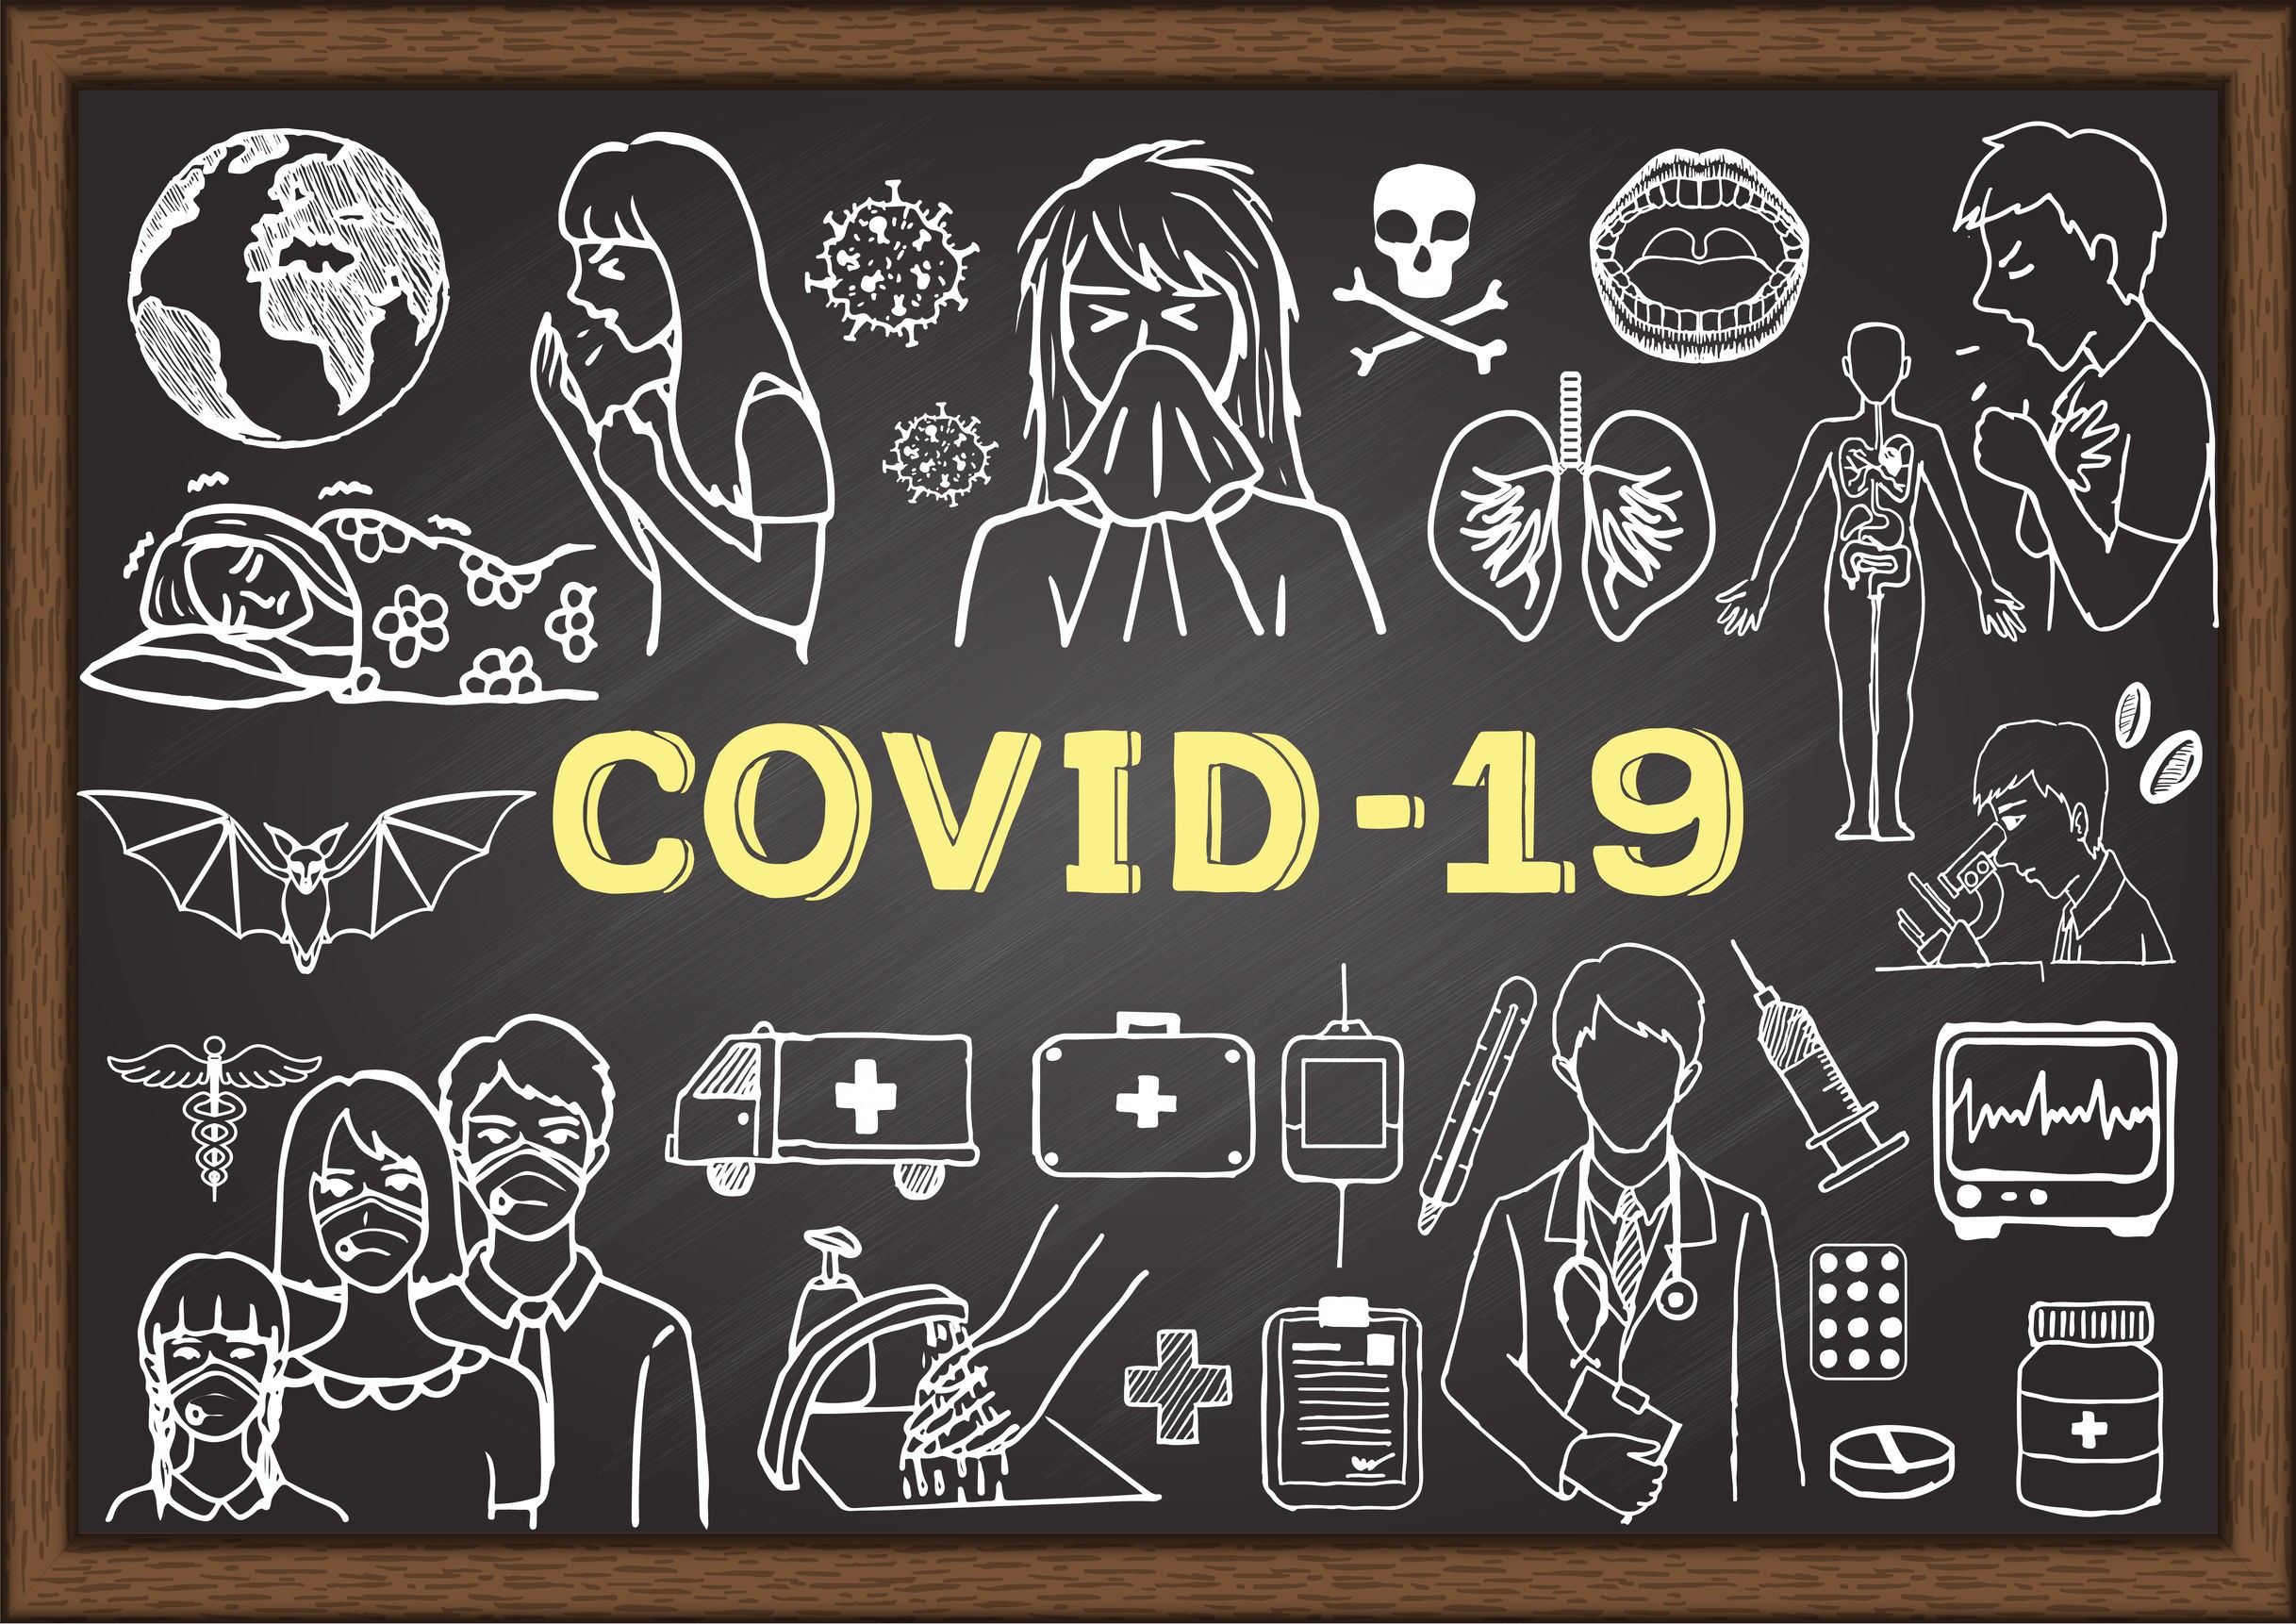 Covid-19: care sunt simptomele si cand sa chemi doctorul?